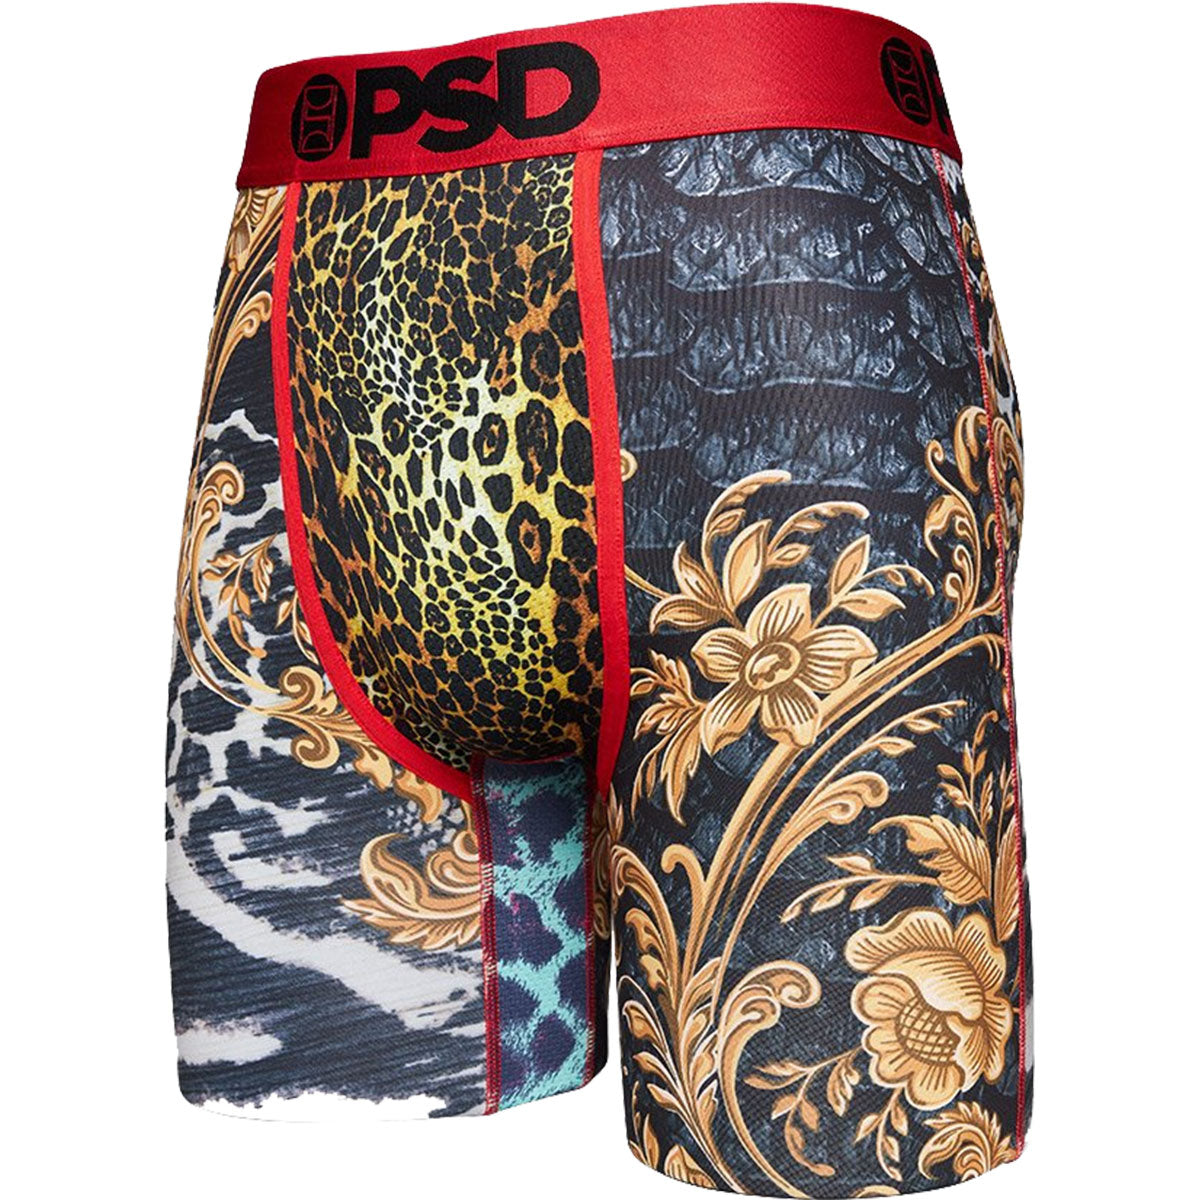 PSD Naruto Uzumaki Air Time Boxer Men's Bottom Underwear (Refurbished, –